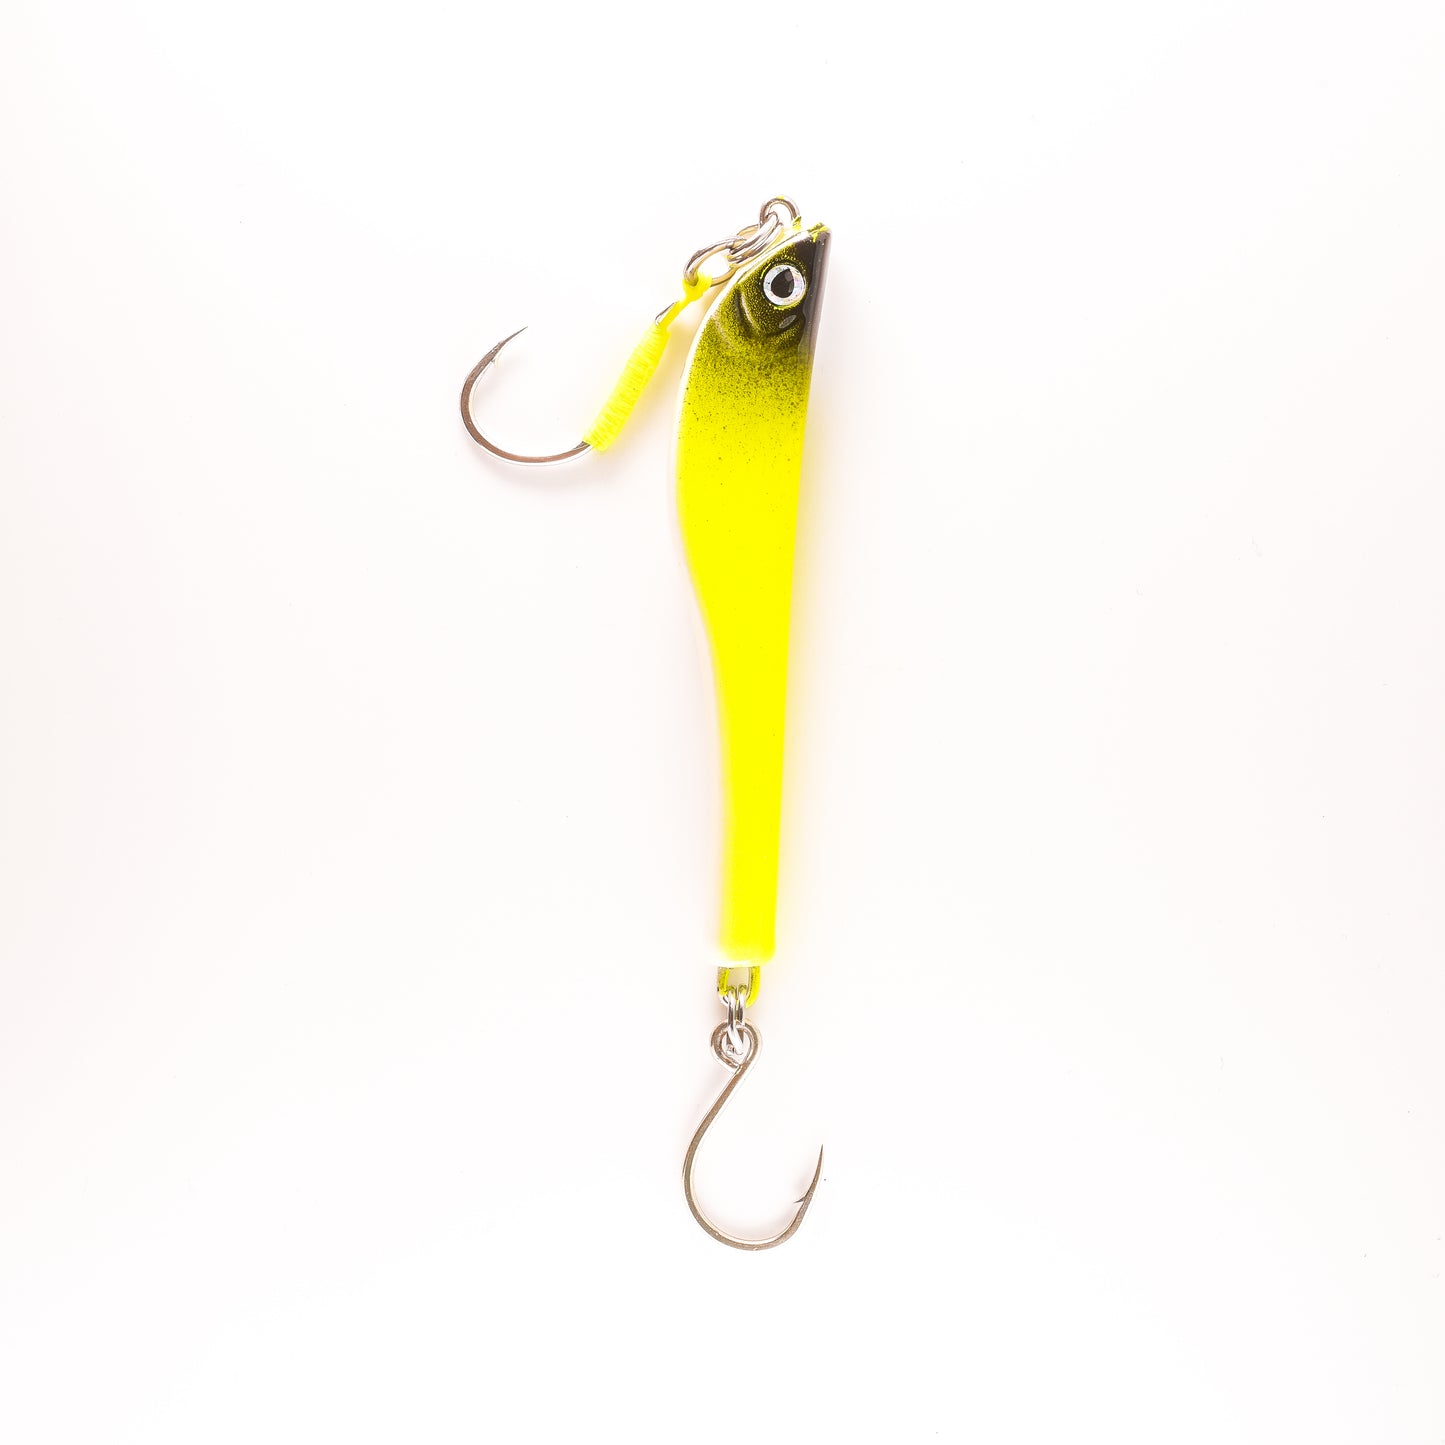 Fish Jig - Chartreuse/Black & White - 2 Oz